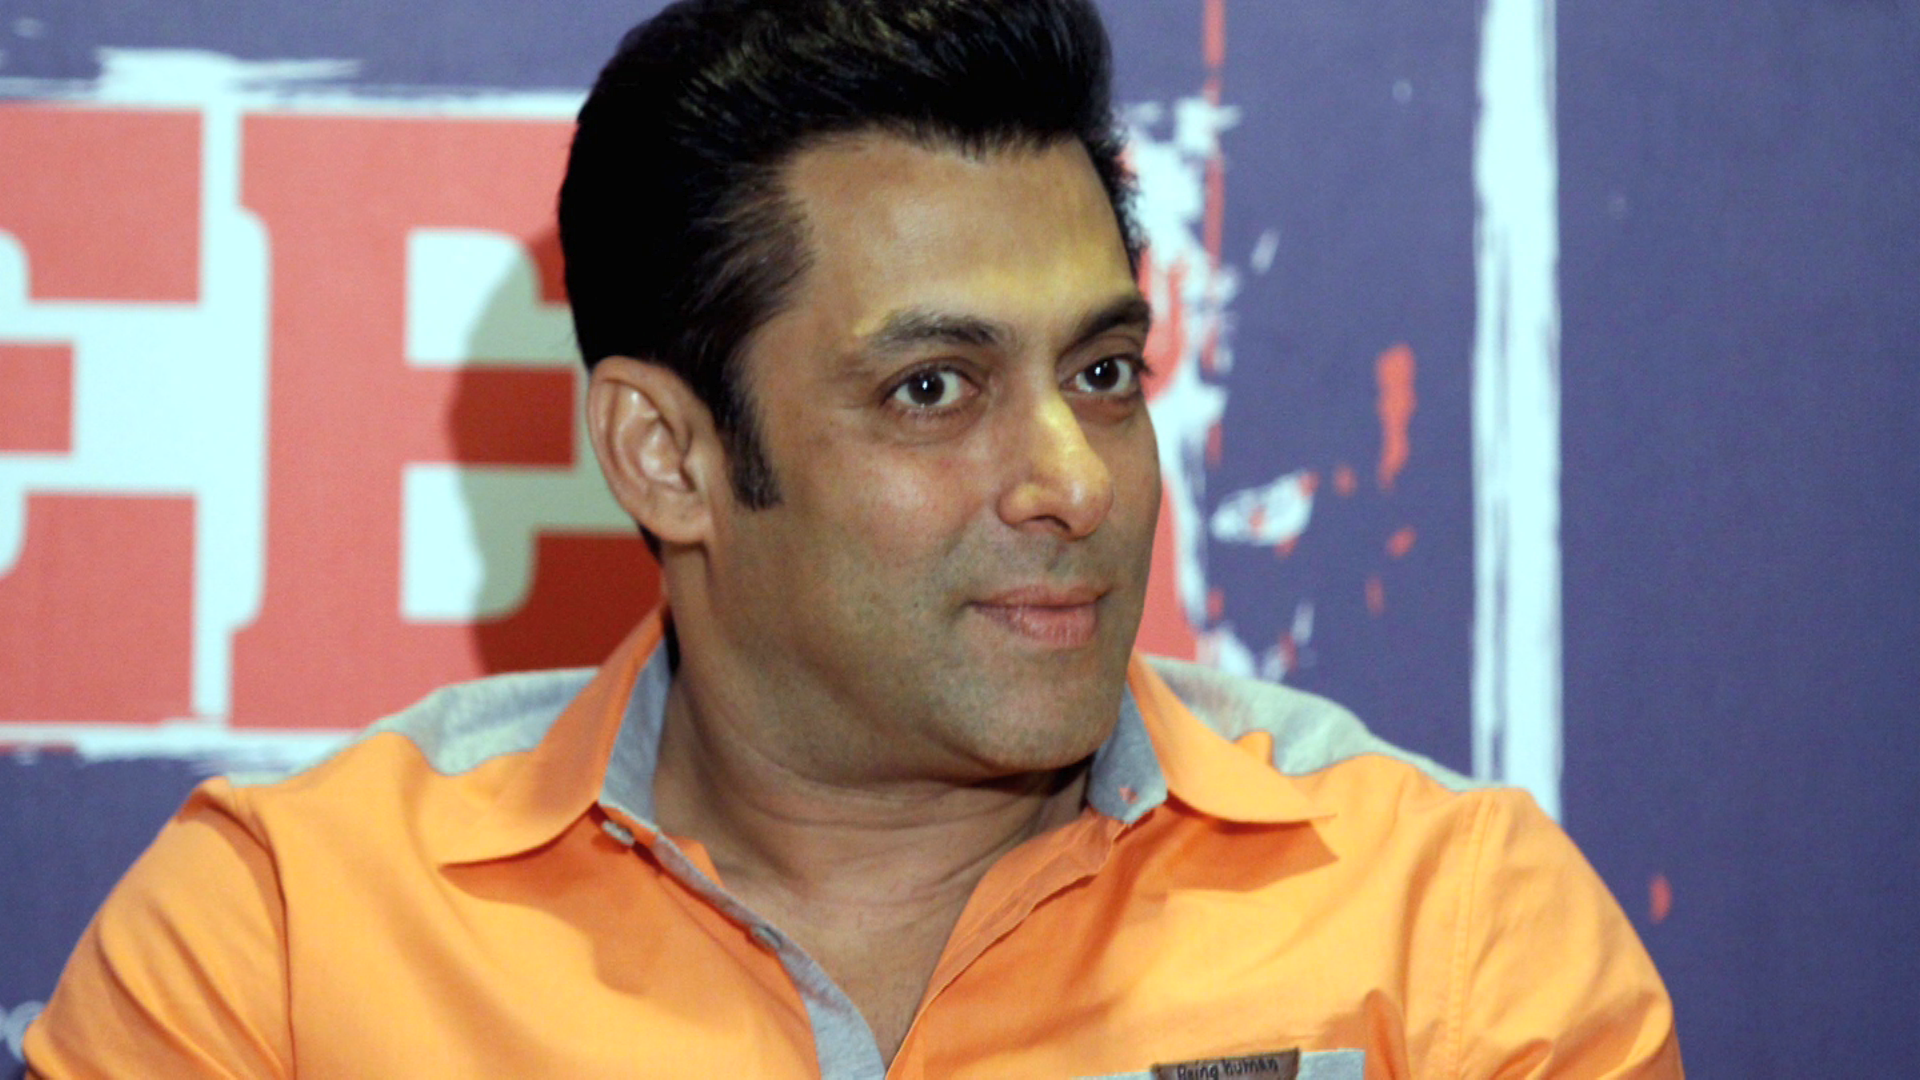 Salmankhan Kixxx Video - Salman Khan's conviction in fatal hit-and-run tossed | CNN